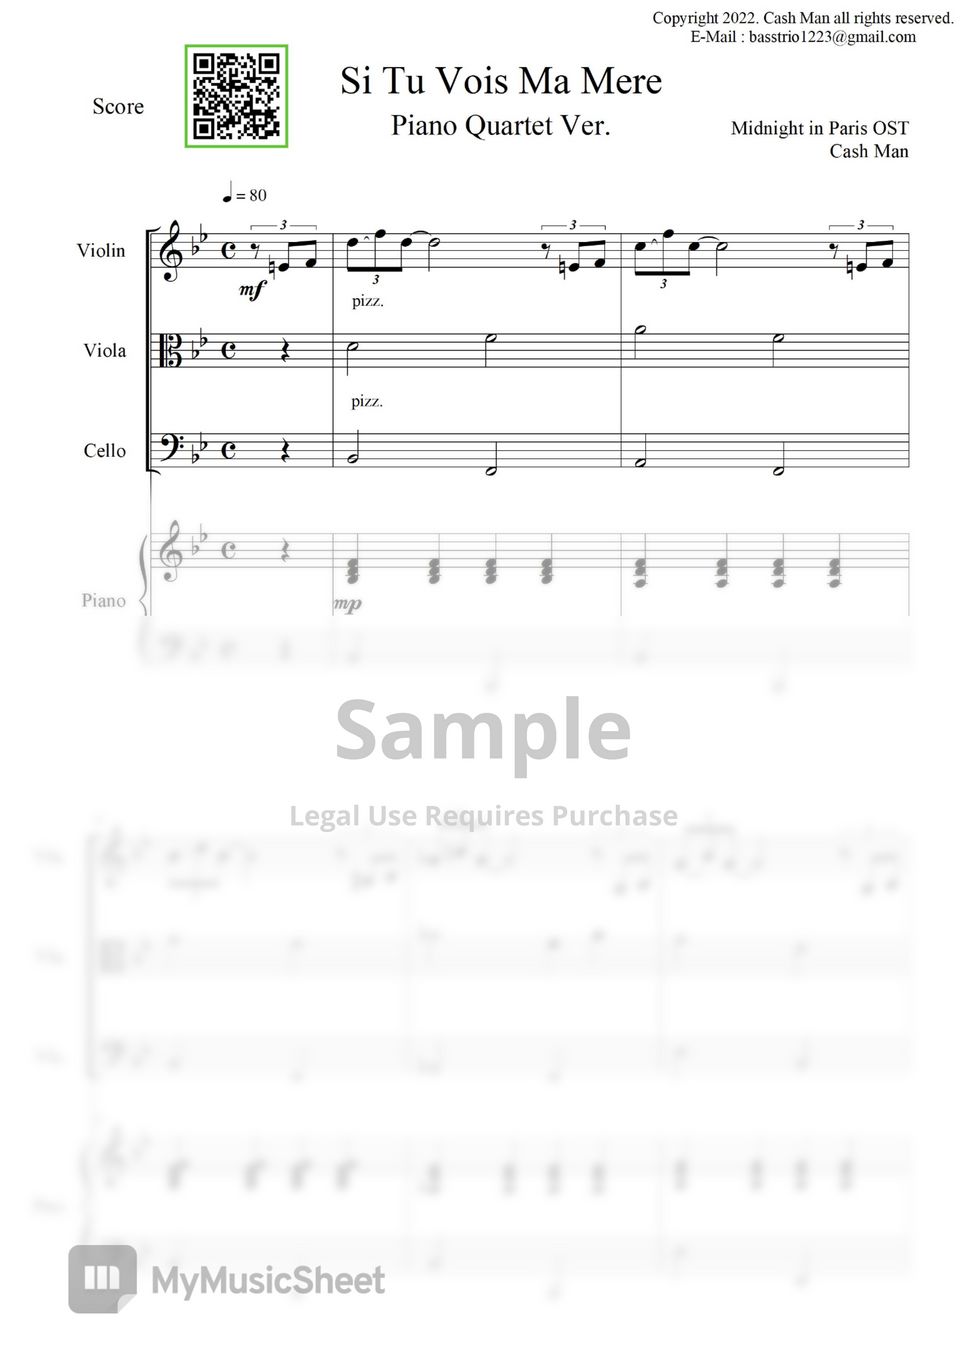 Sidney Bechet - Si Tu Vois Ma Mere (재즈 / 피아노 4중주 / 총보 / 파트보 / 쉬운 편곡) by Cash Man